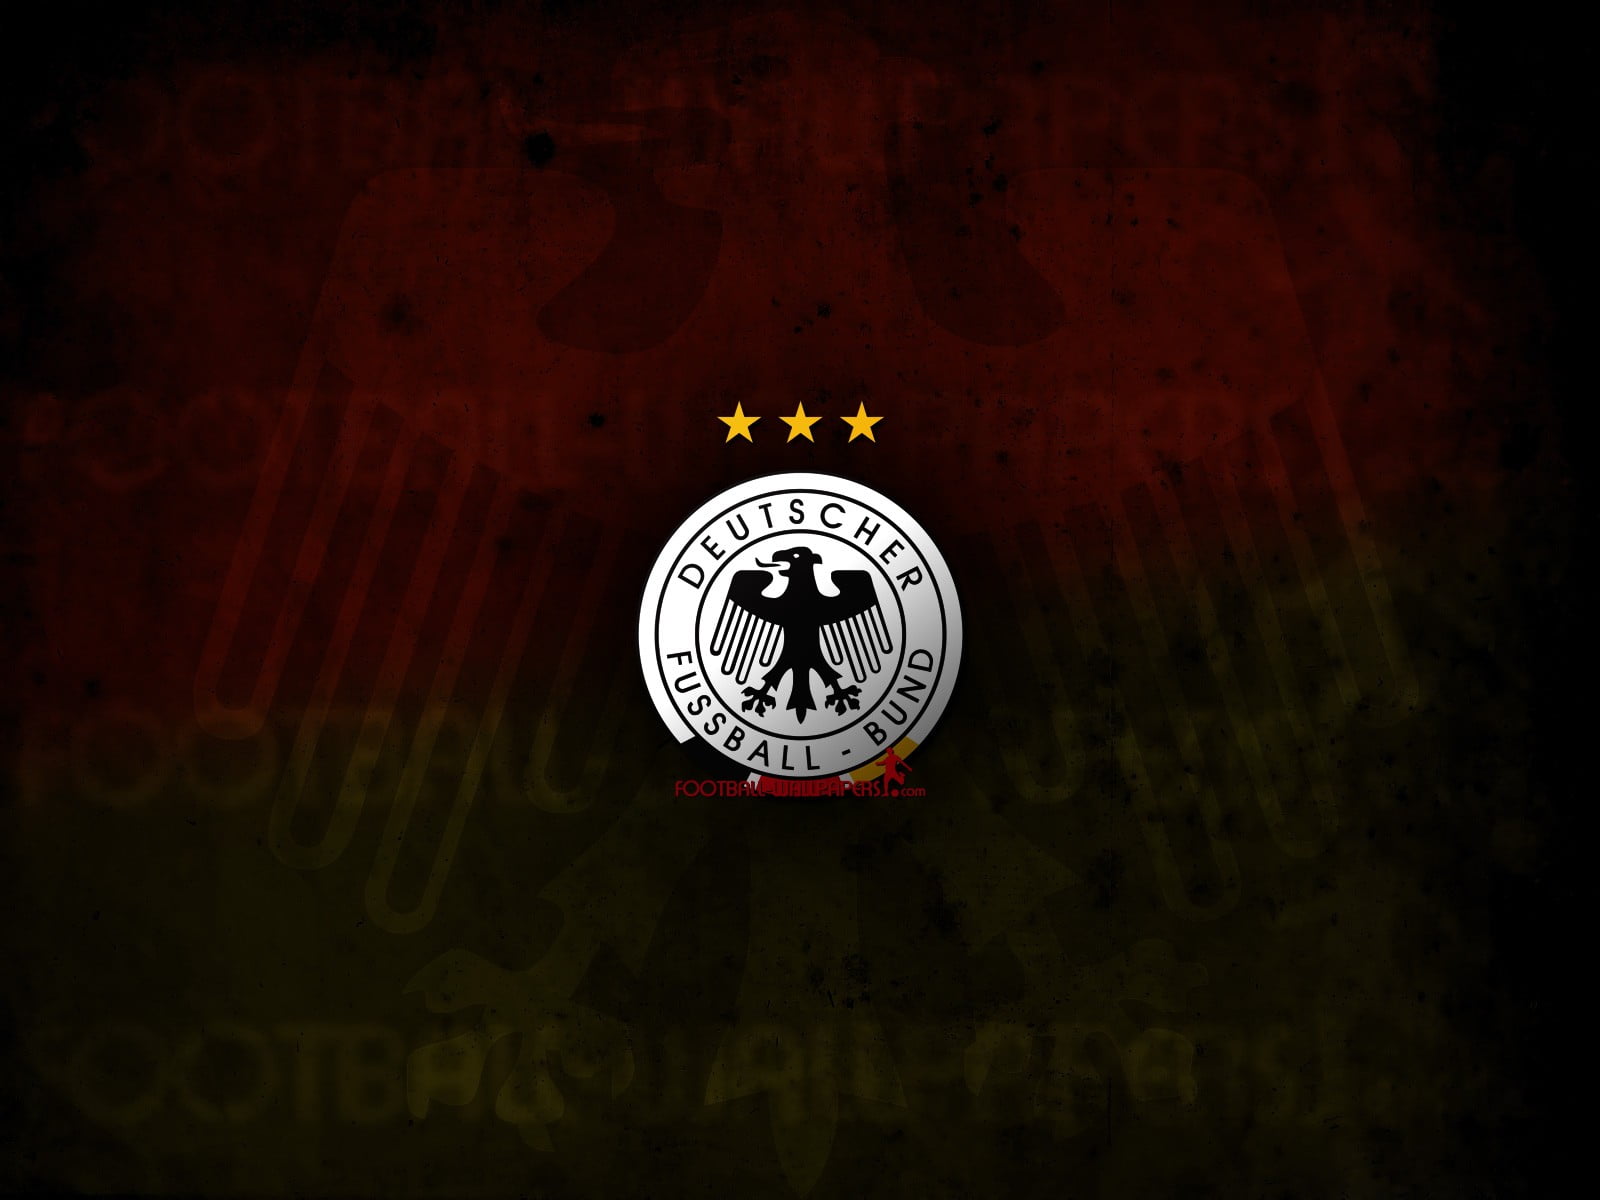 Deutscher fussball bund logo, Germany, soccer, time, clock, indoors